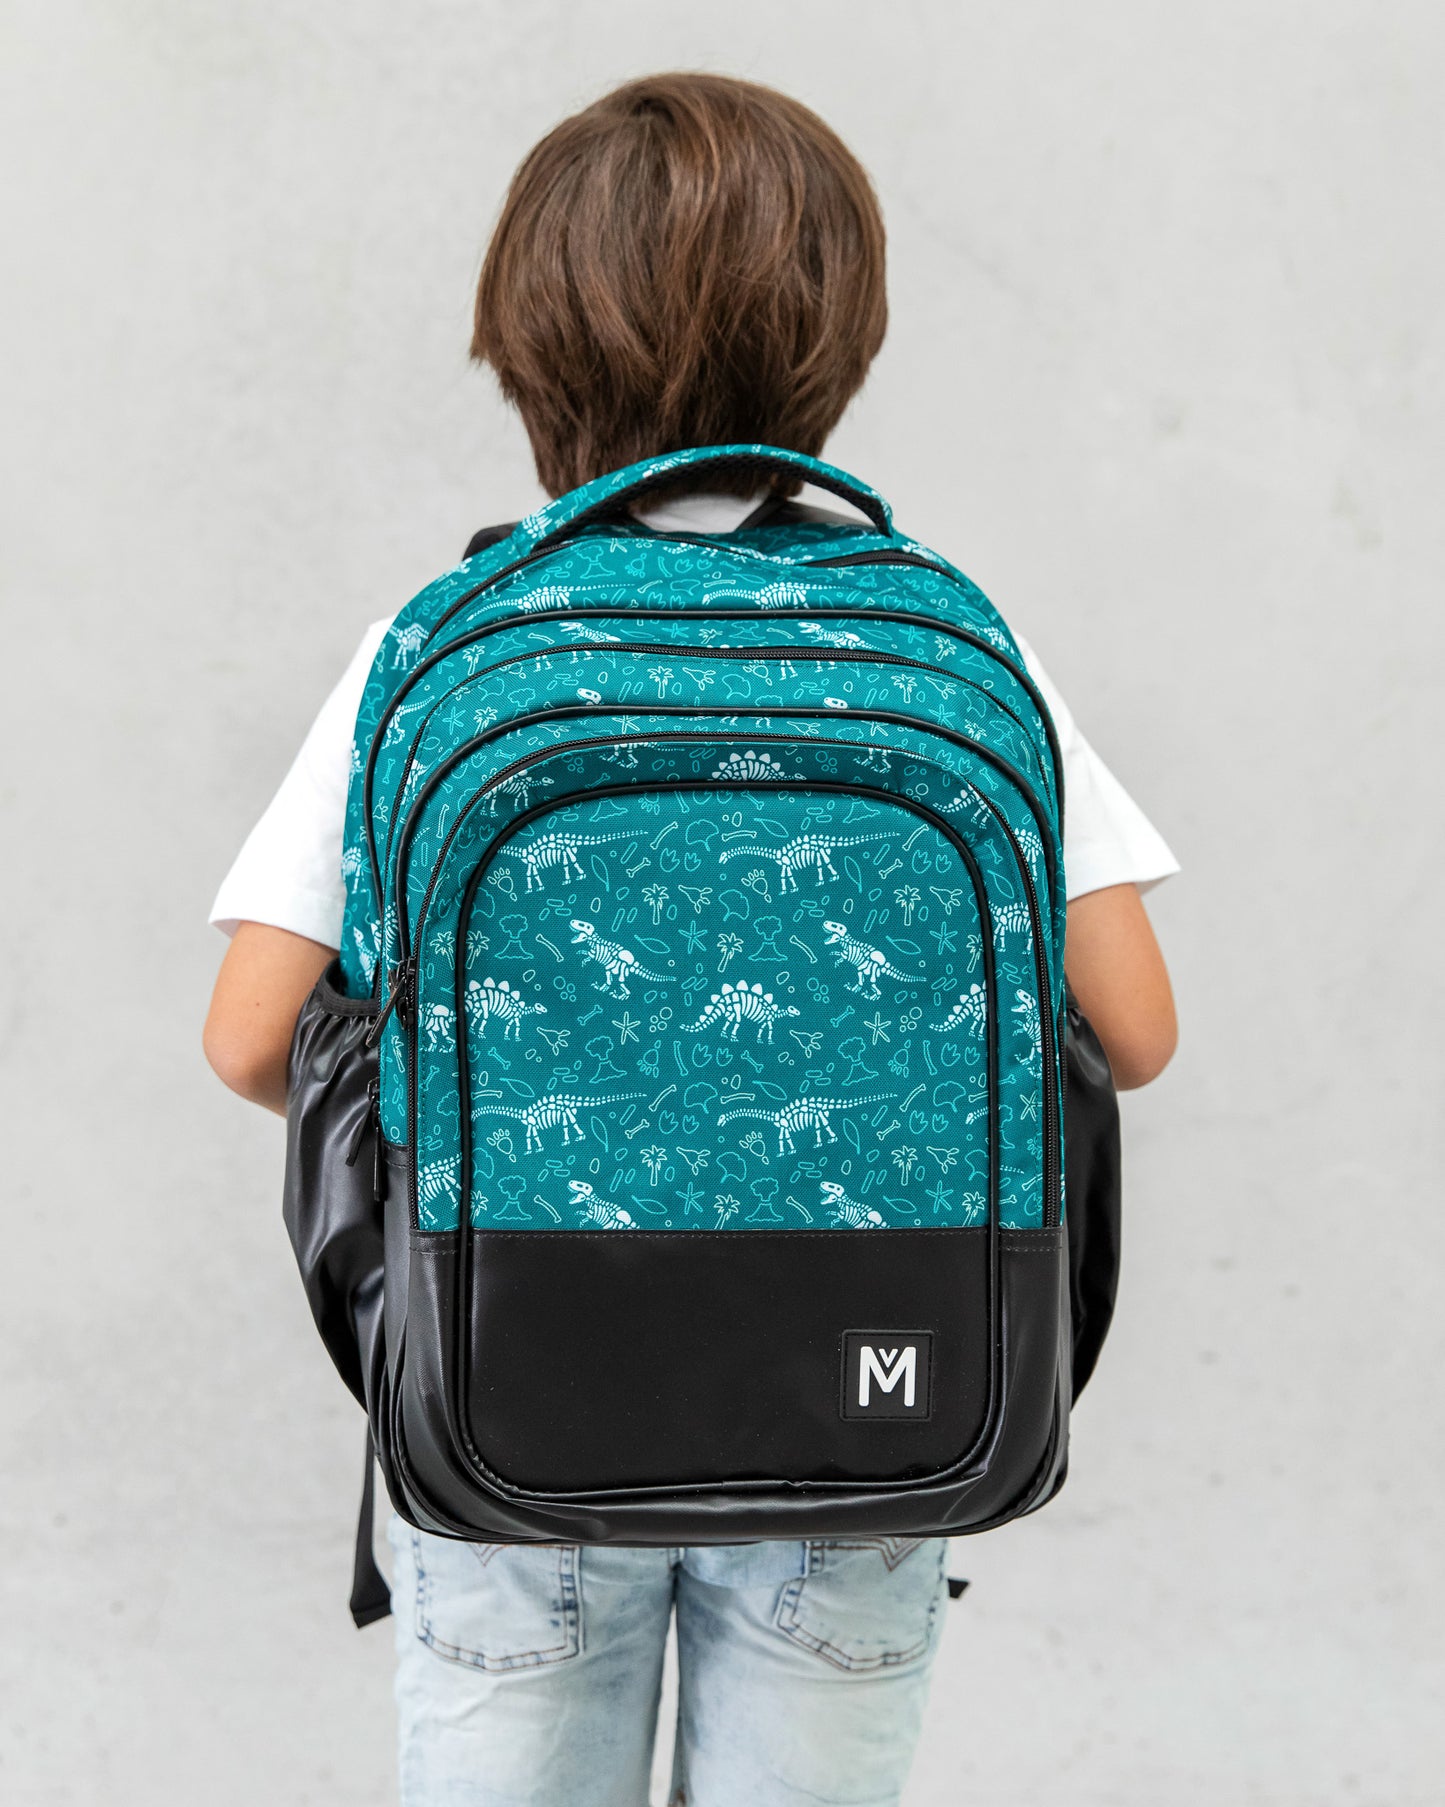 MontiiCo School Bag Package - Dinosaur Land